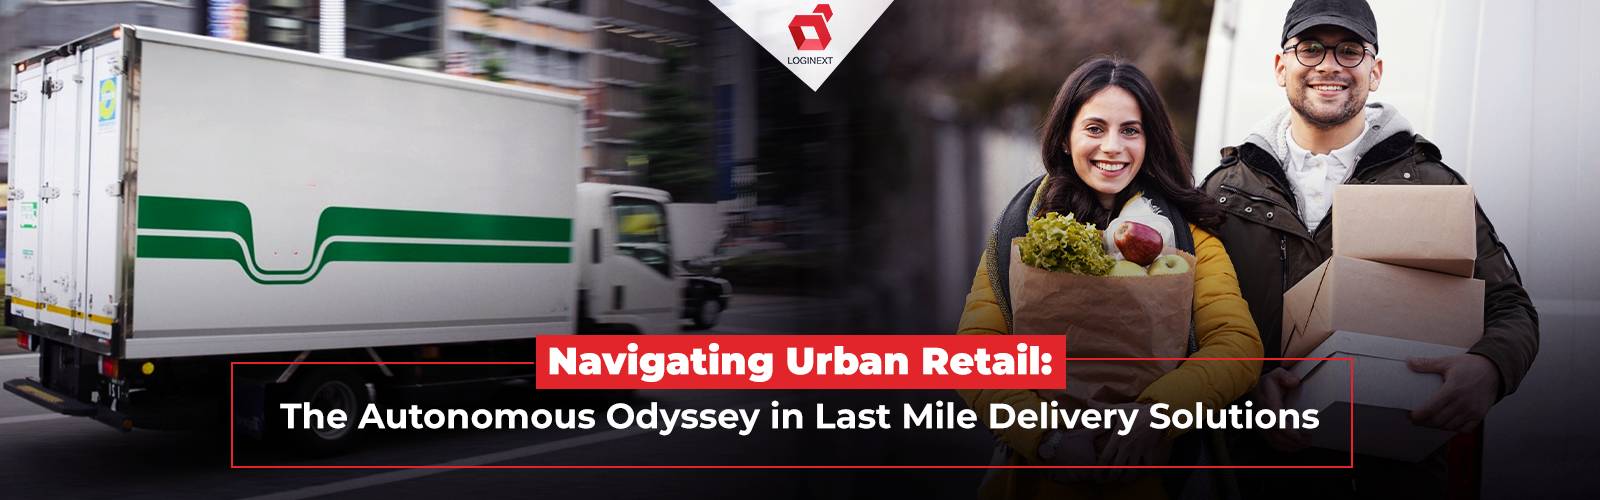 De autonome Odyssee in Last Mile Delivery Solutions